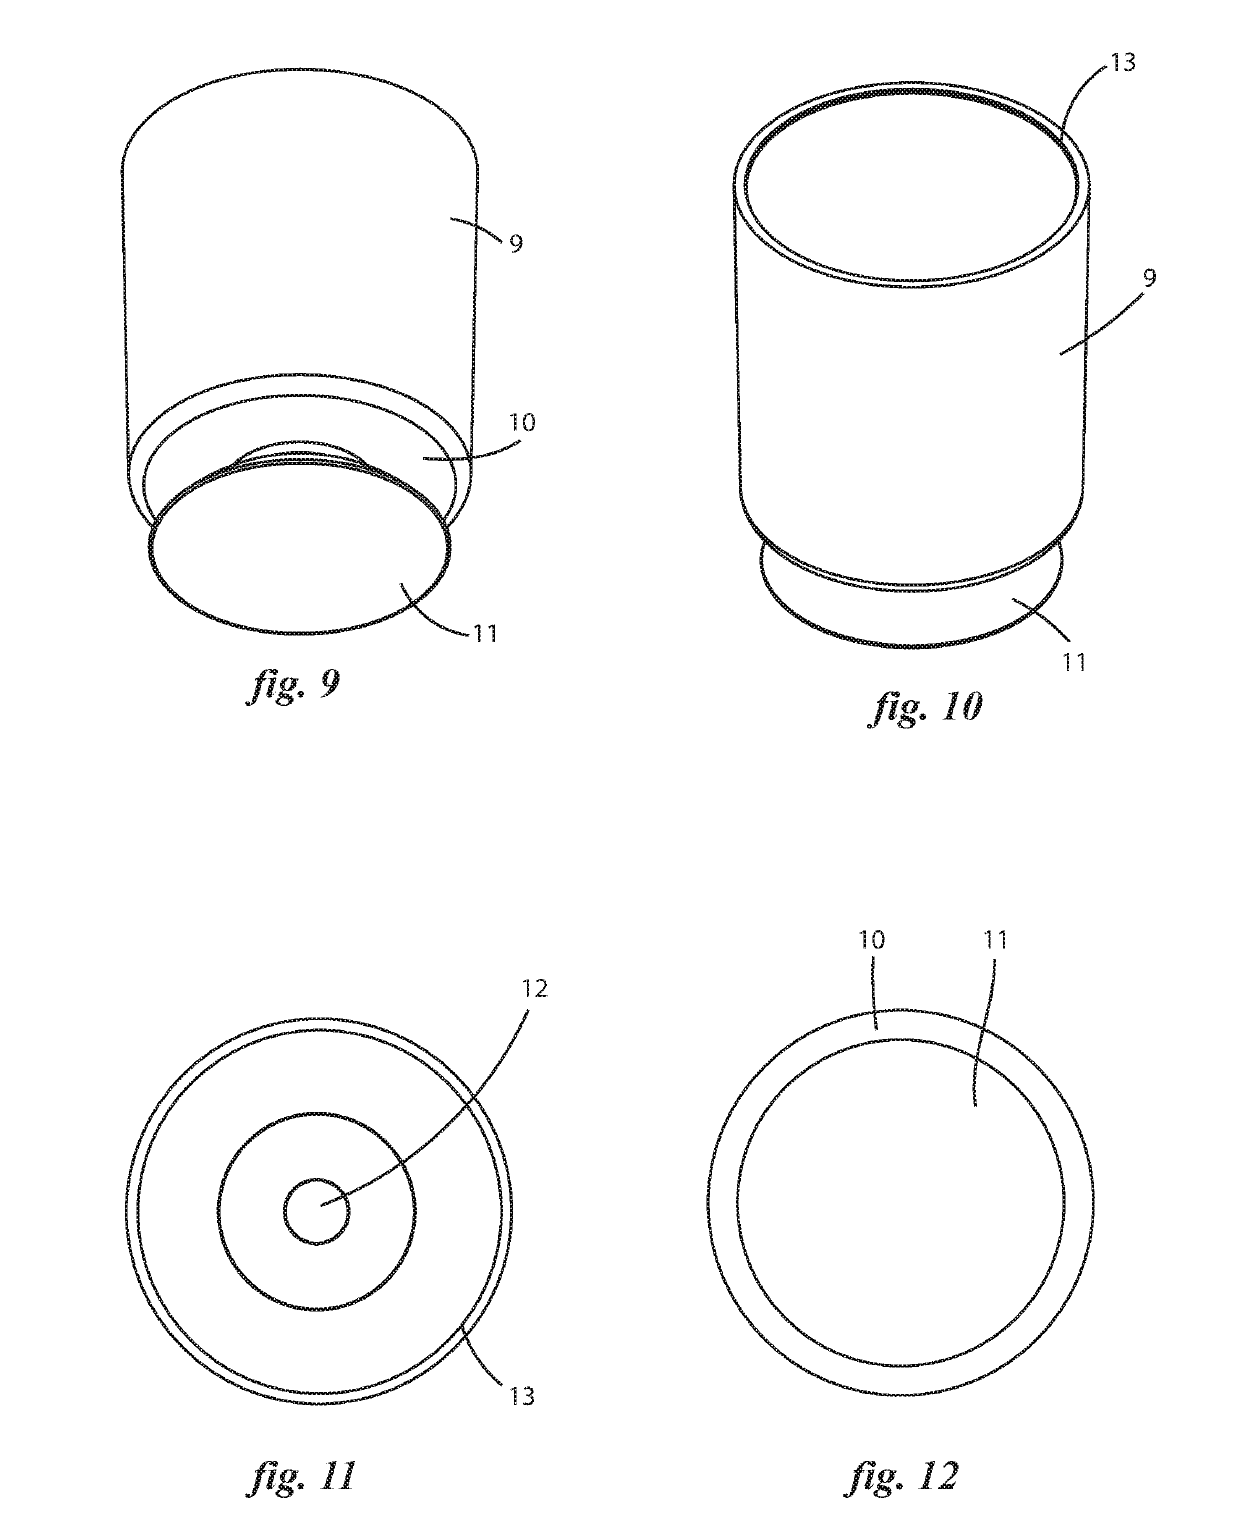 Diaper cream applicator with lid